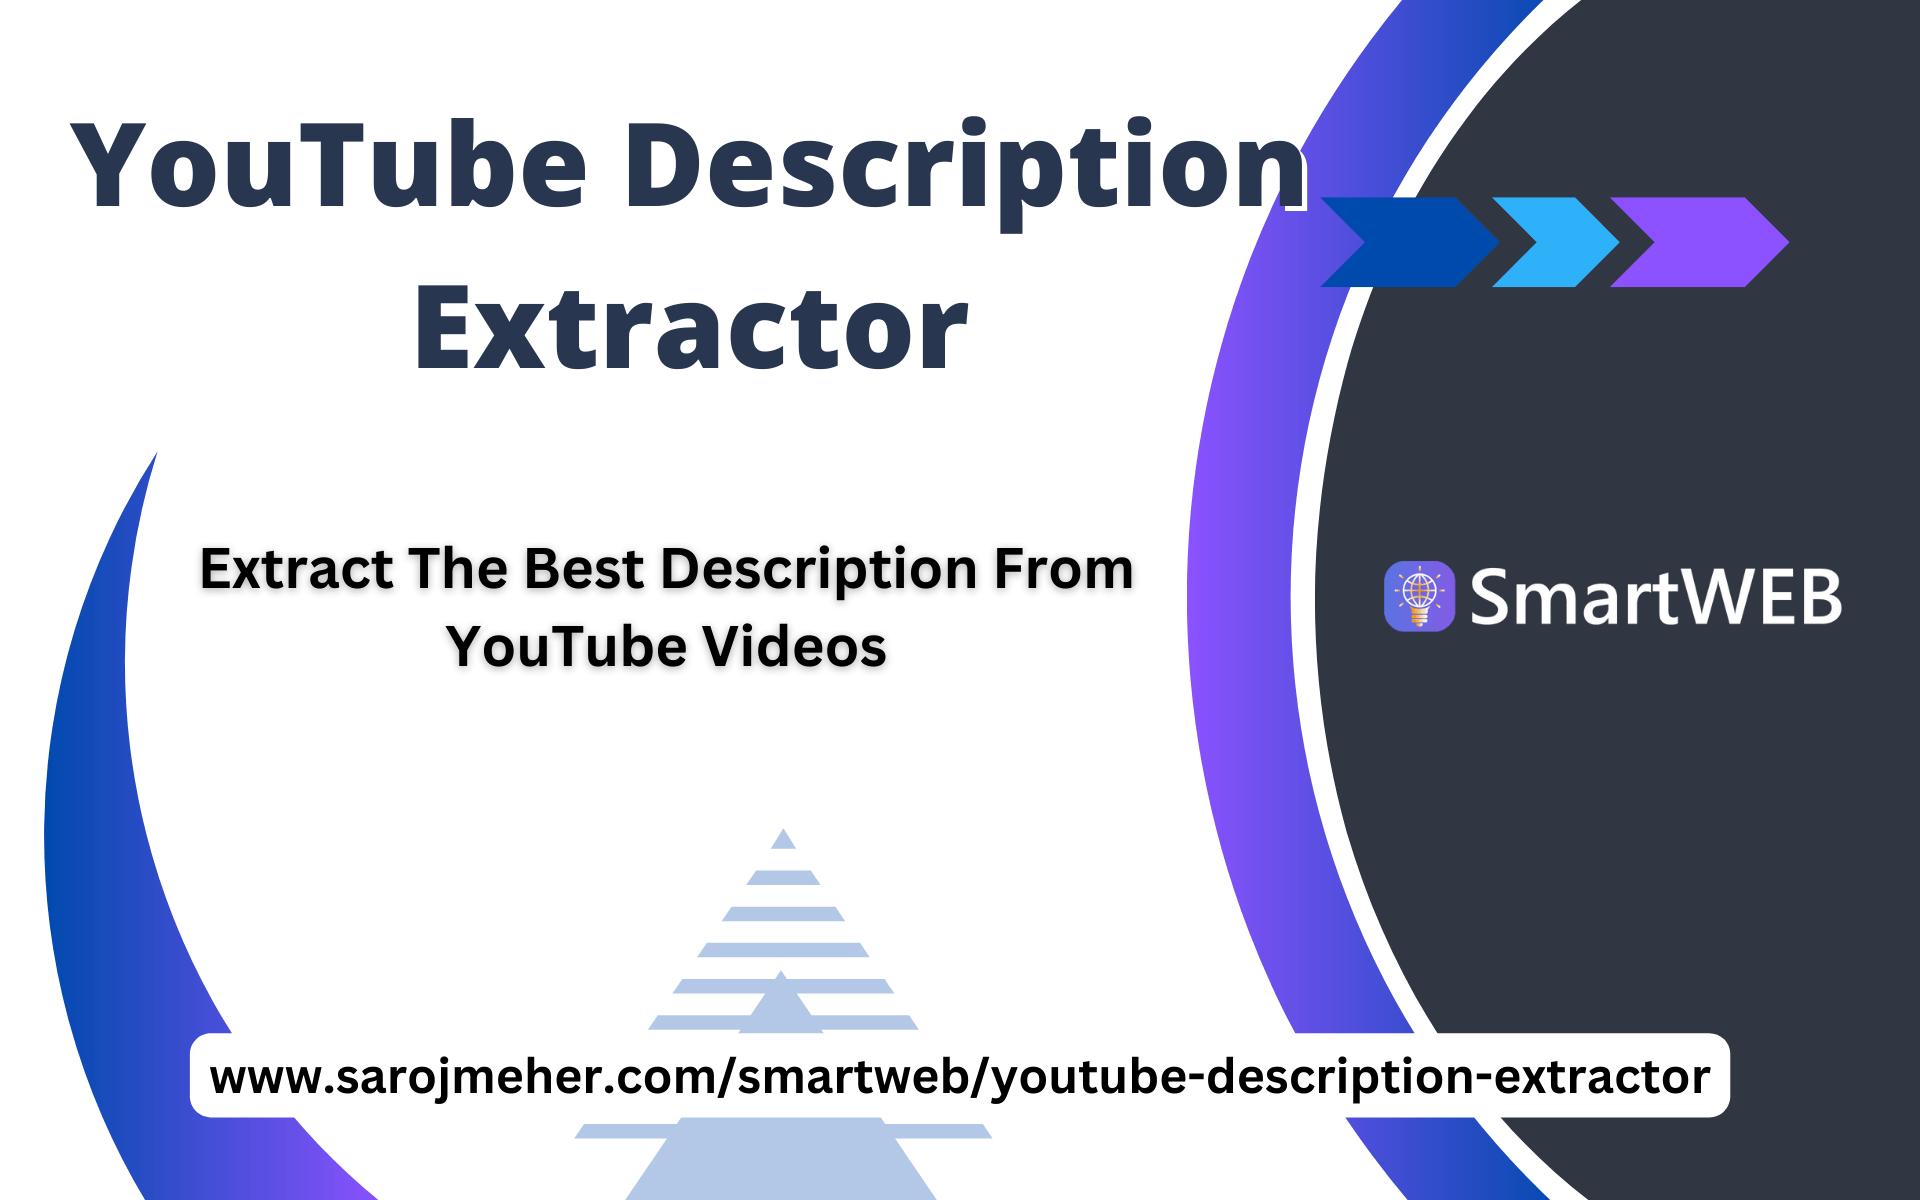 YouTube Description Extractor